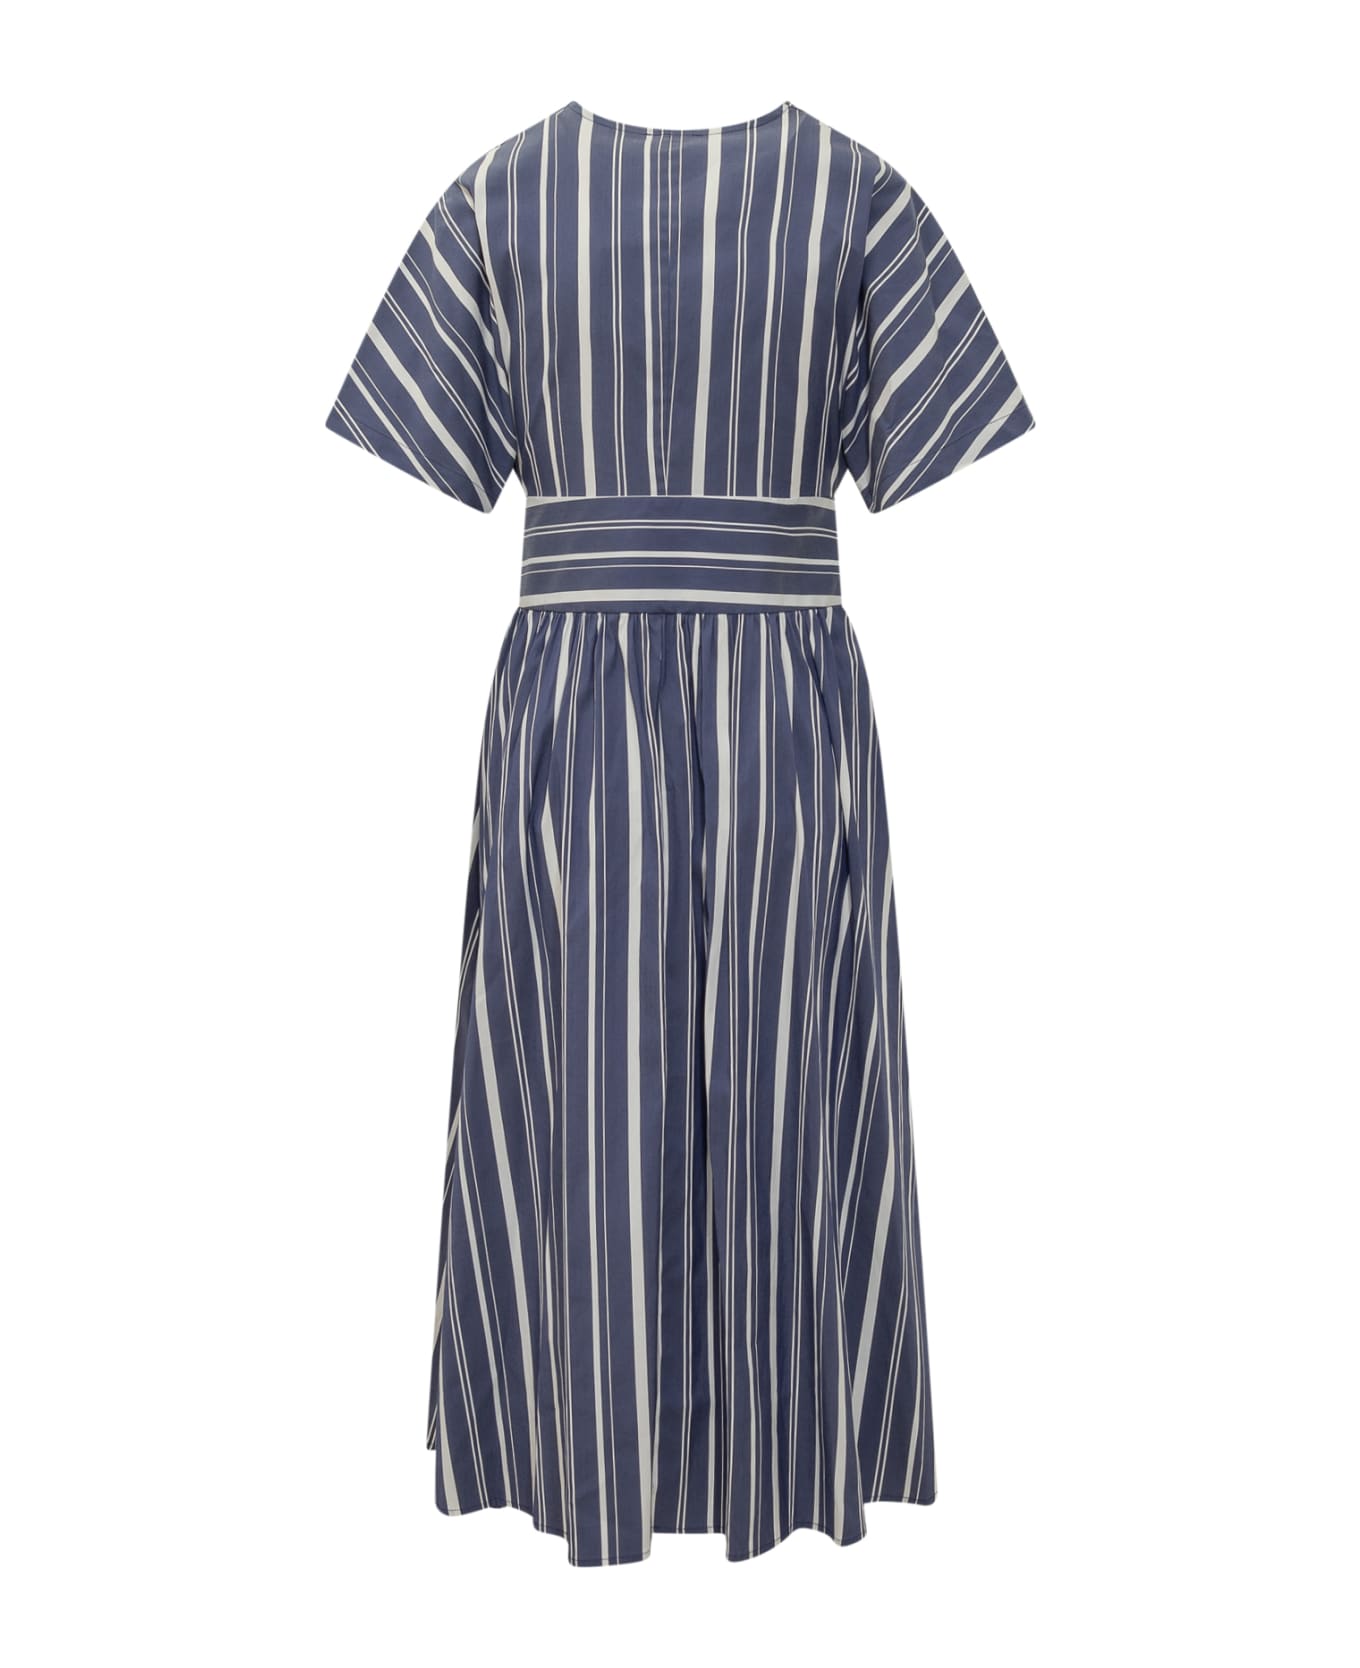 Woolrich Dress With Striped Pattern - Blue